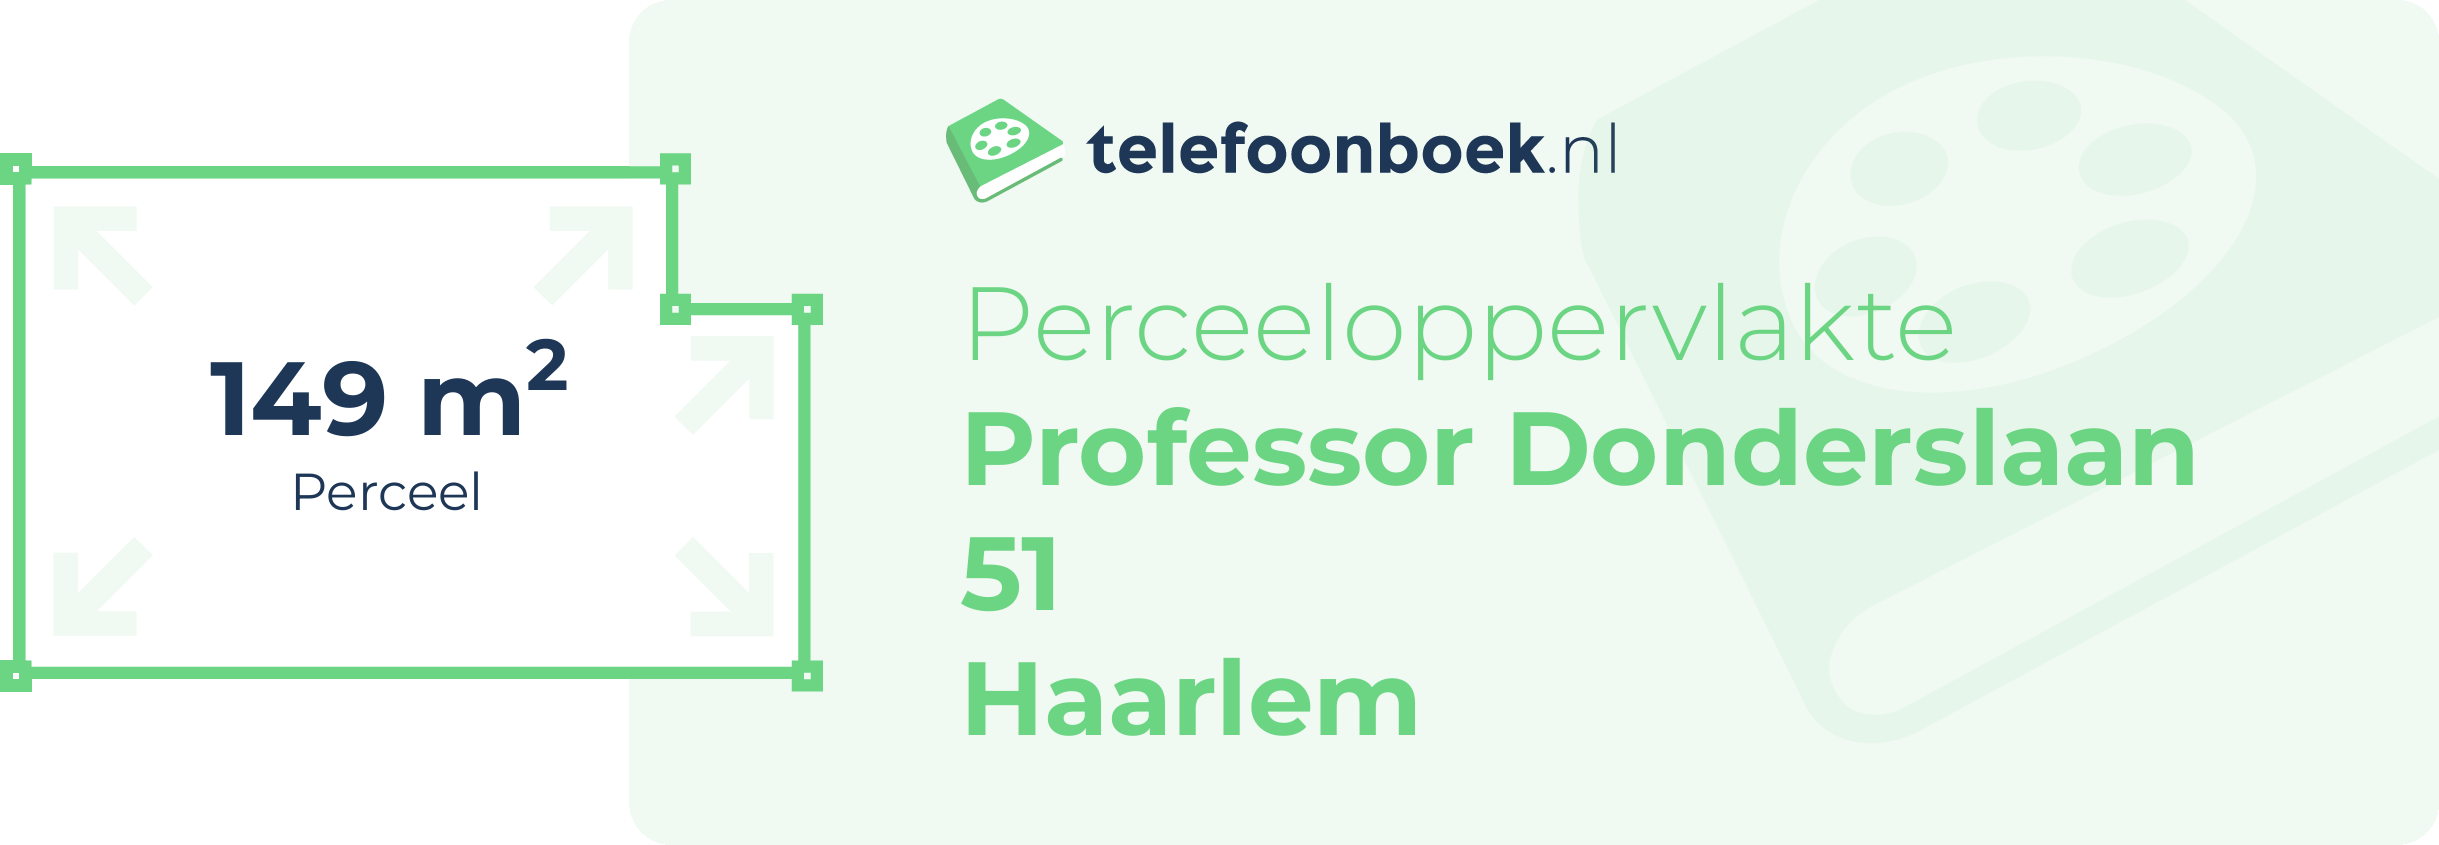 Perceeloppervlakte Professor Donderslaan 51 Haarlem